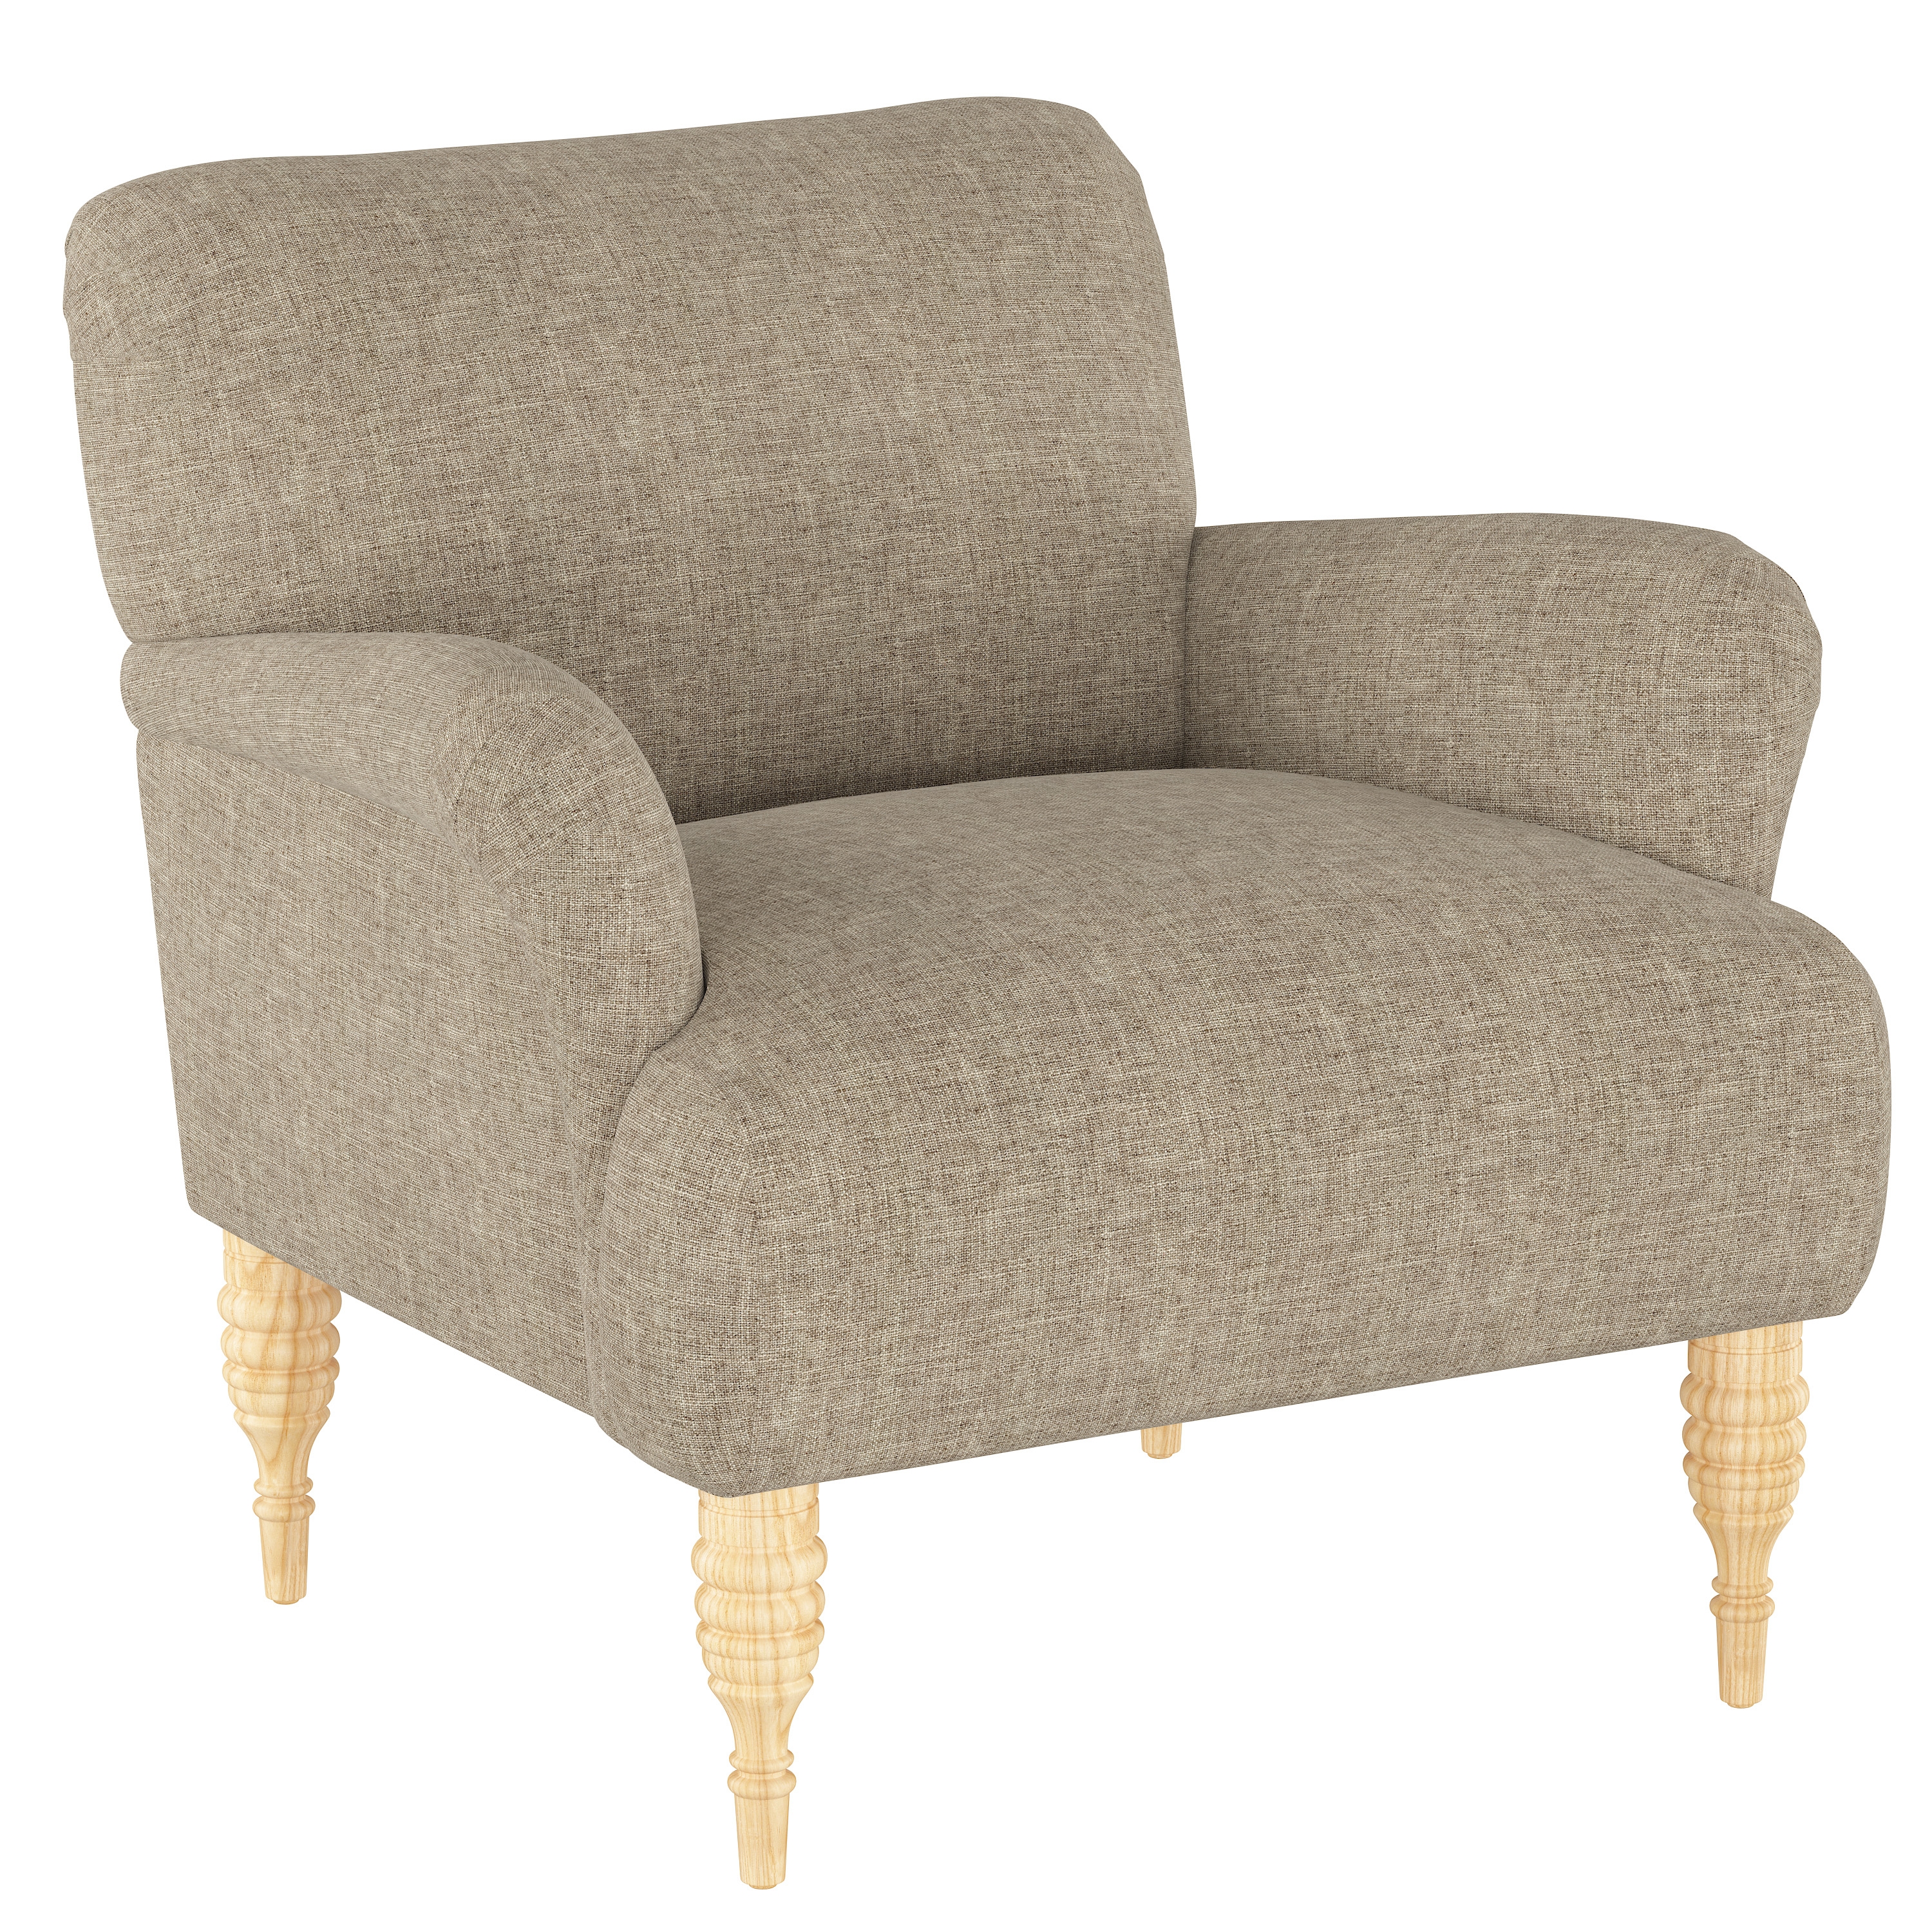 Merrill Chair, Linen - Image 1